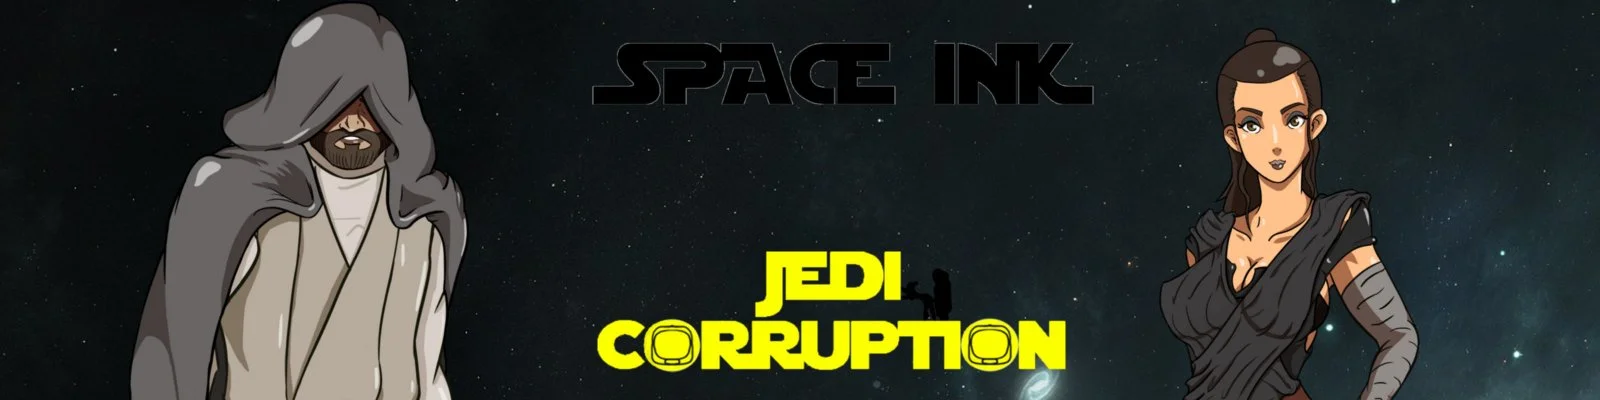 Jedi Corruption [v0.1] main image